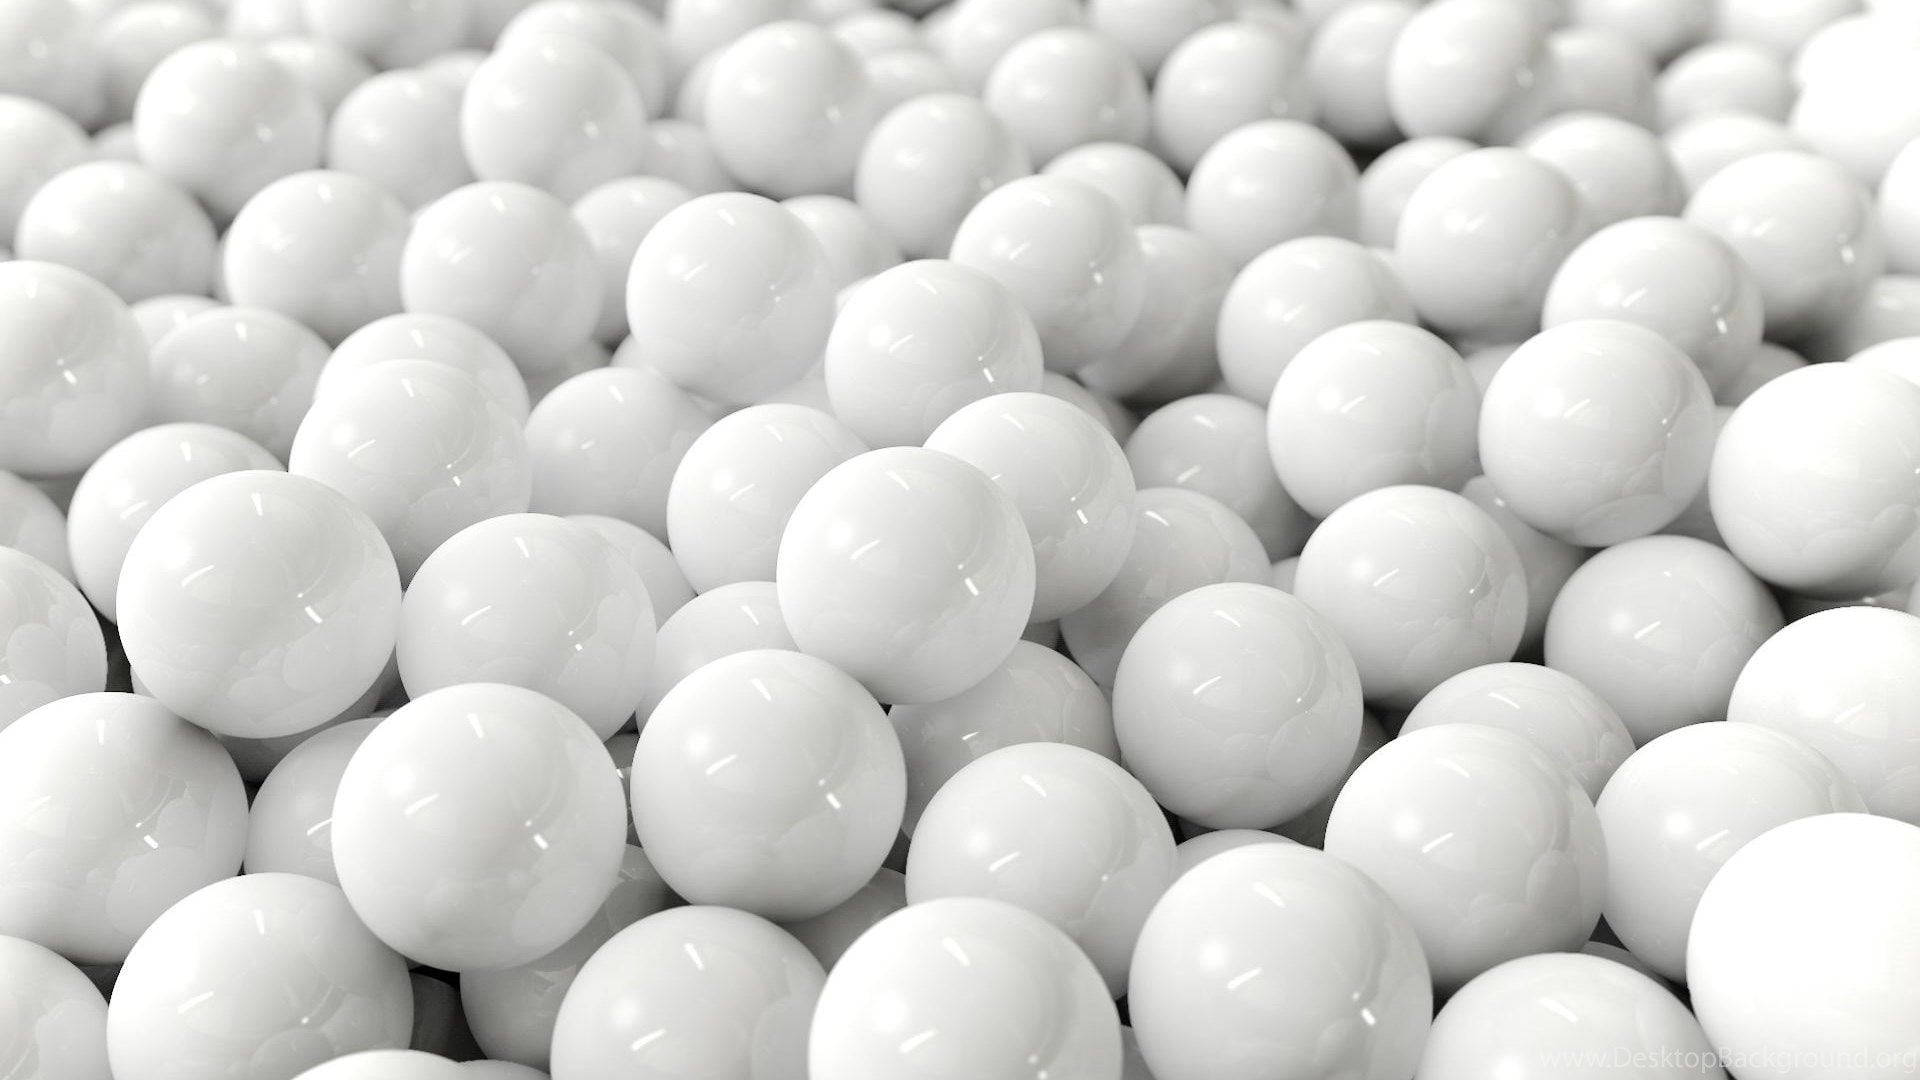 Cool White Balls Background